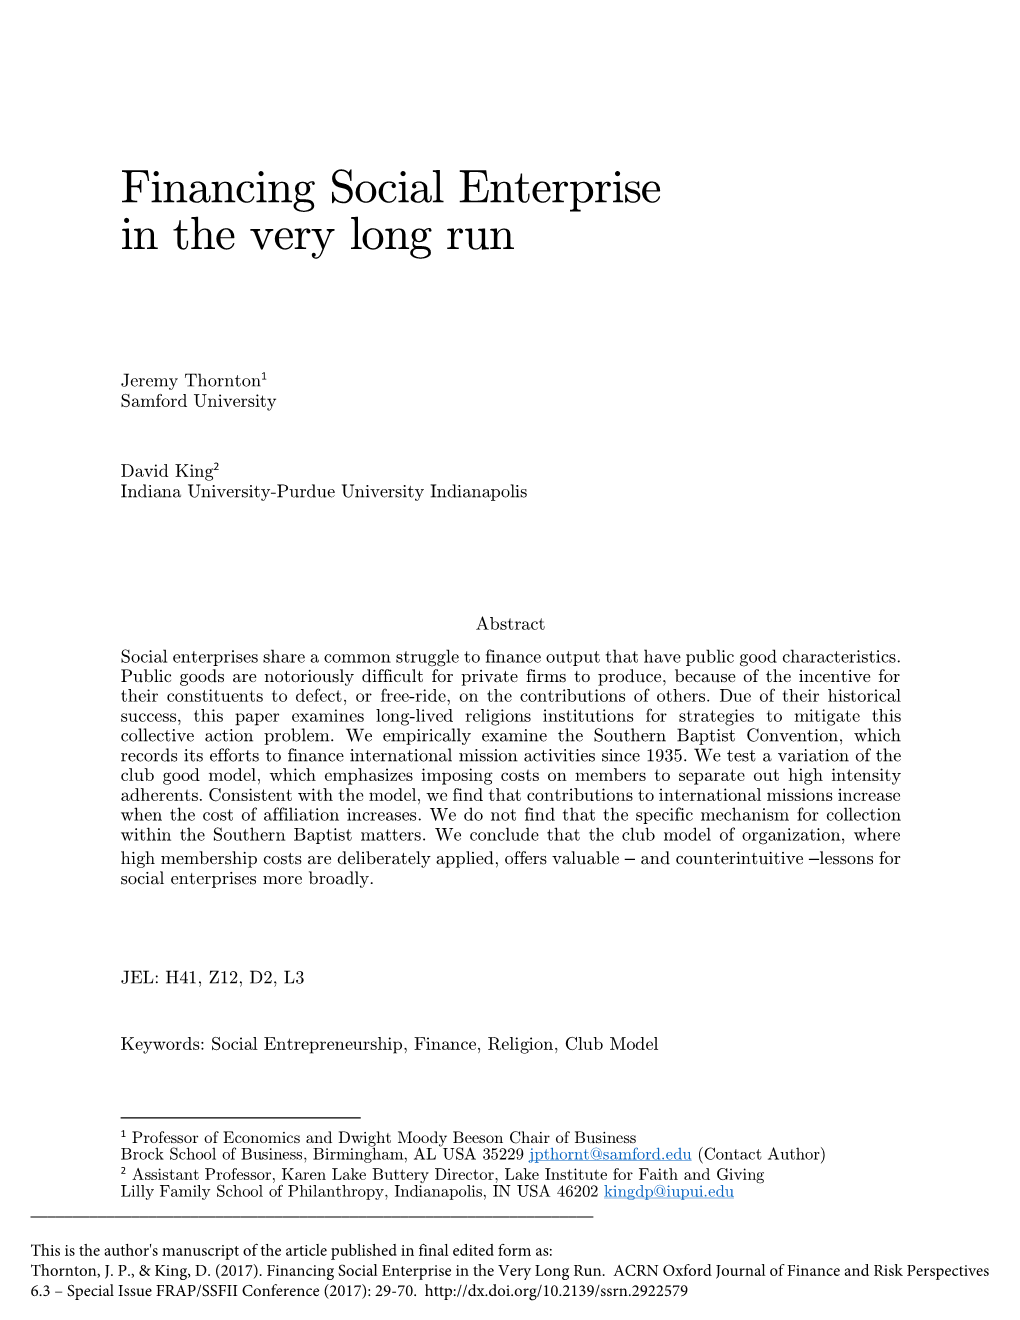 Financing Social Enterprise in the Very Long Run